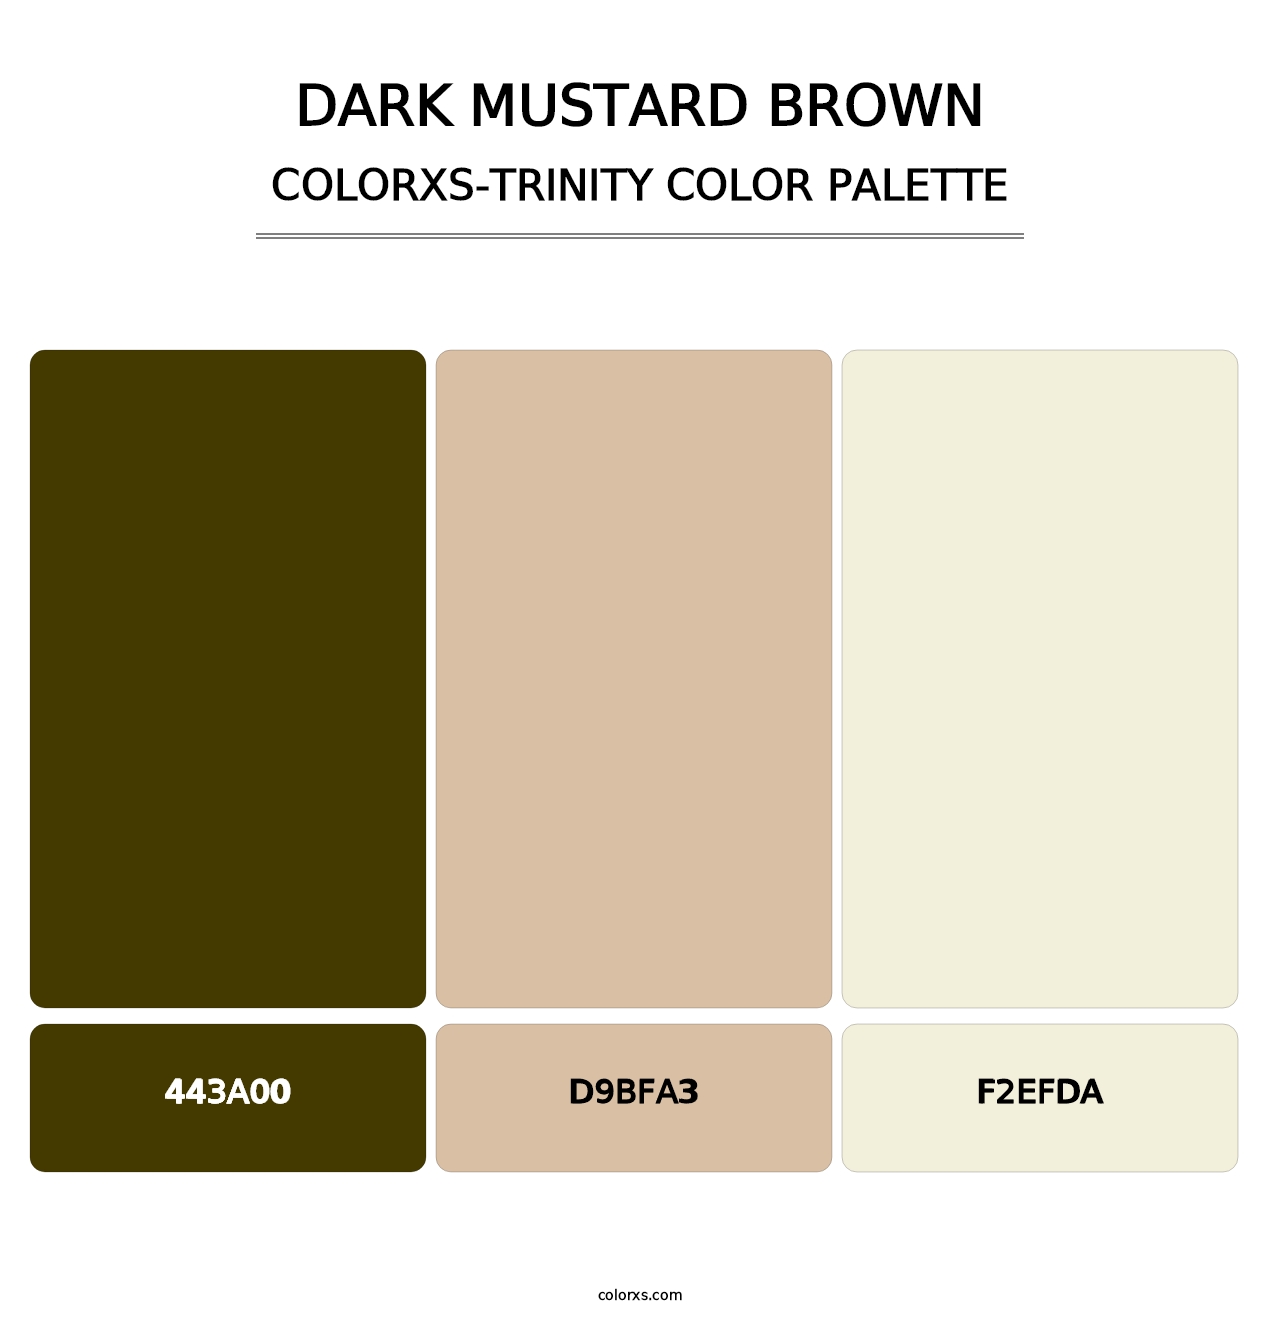 Dark Mustard Brown - Colorxs Trinity Palette